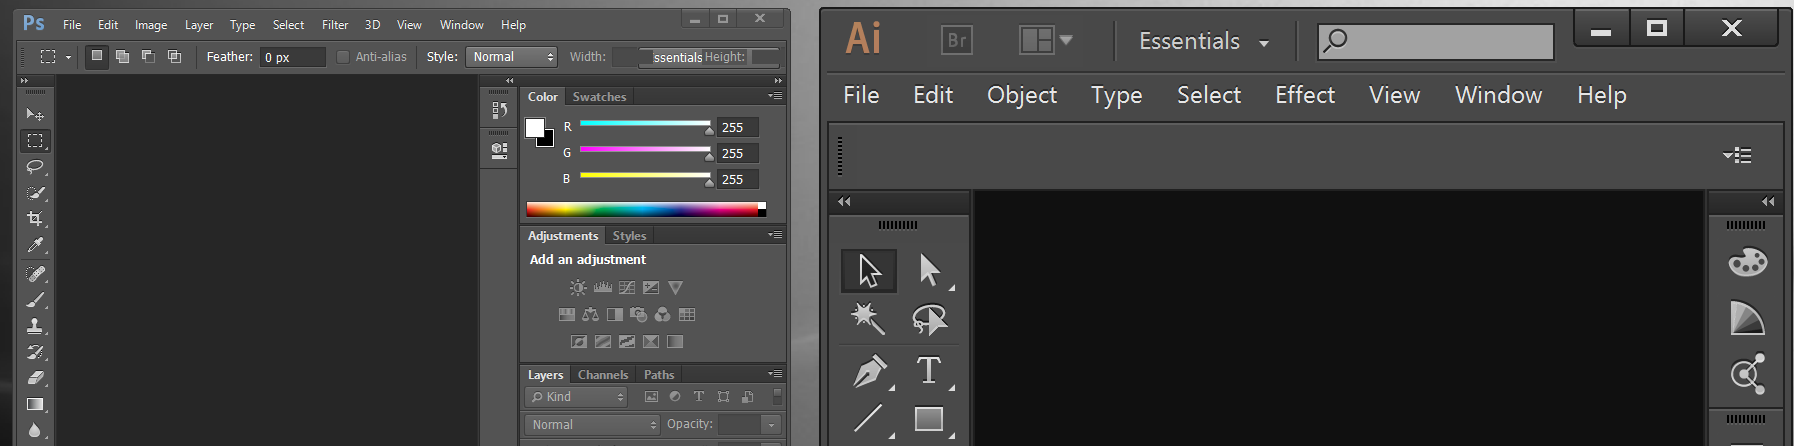 Adobe Photoshop CC menu problem.PNG